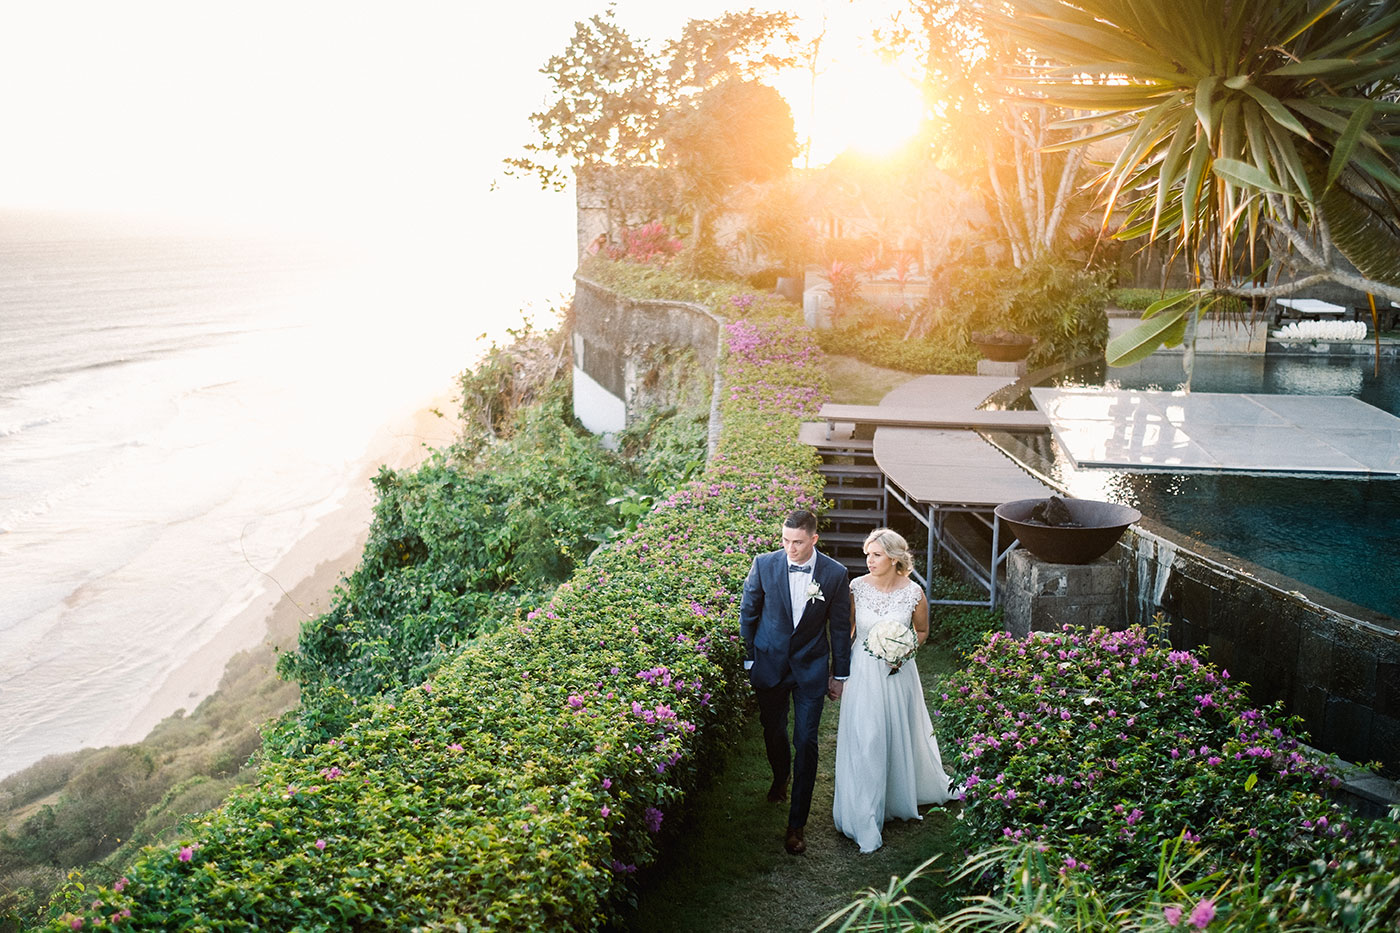 Best Wedding Venues to Book in Bali